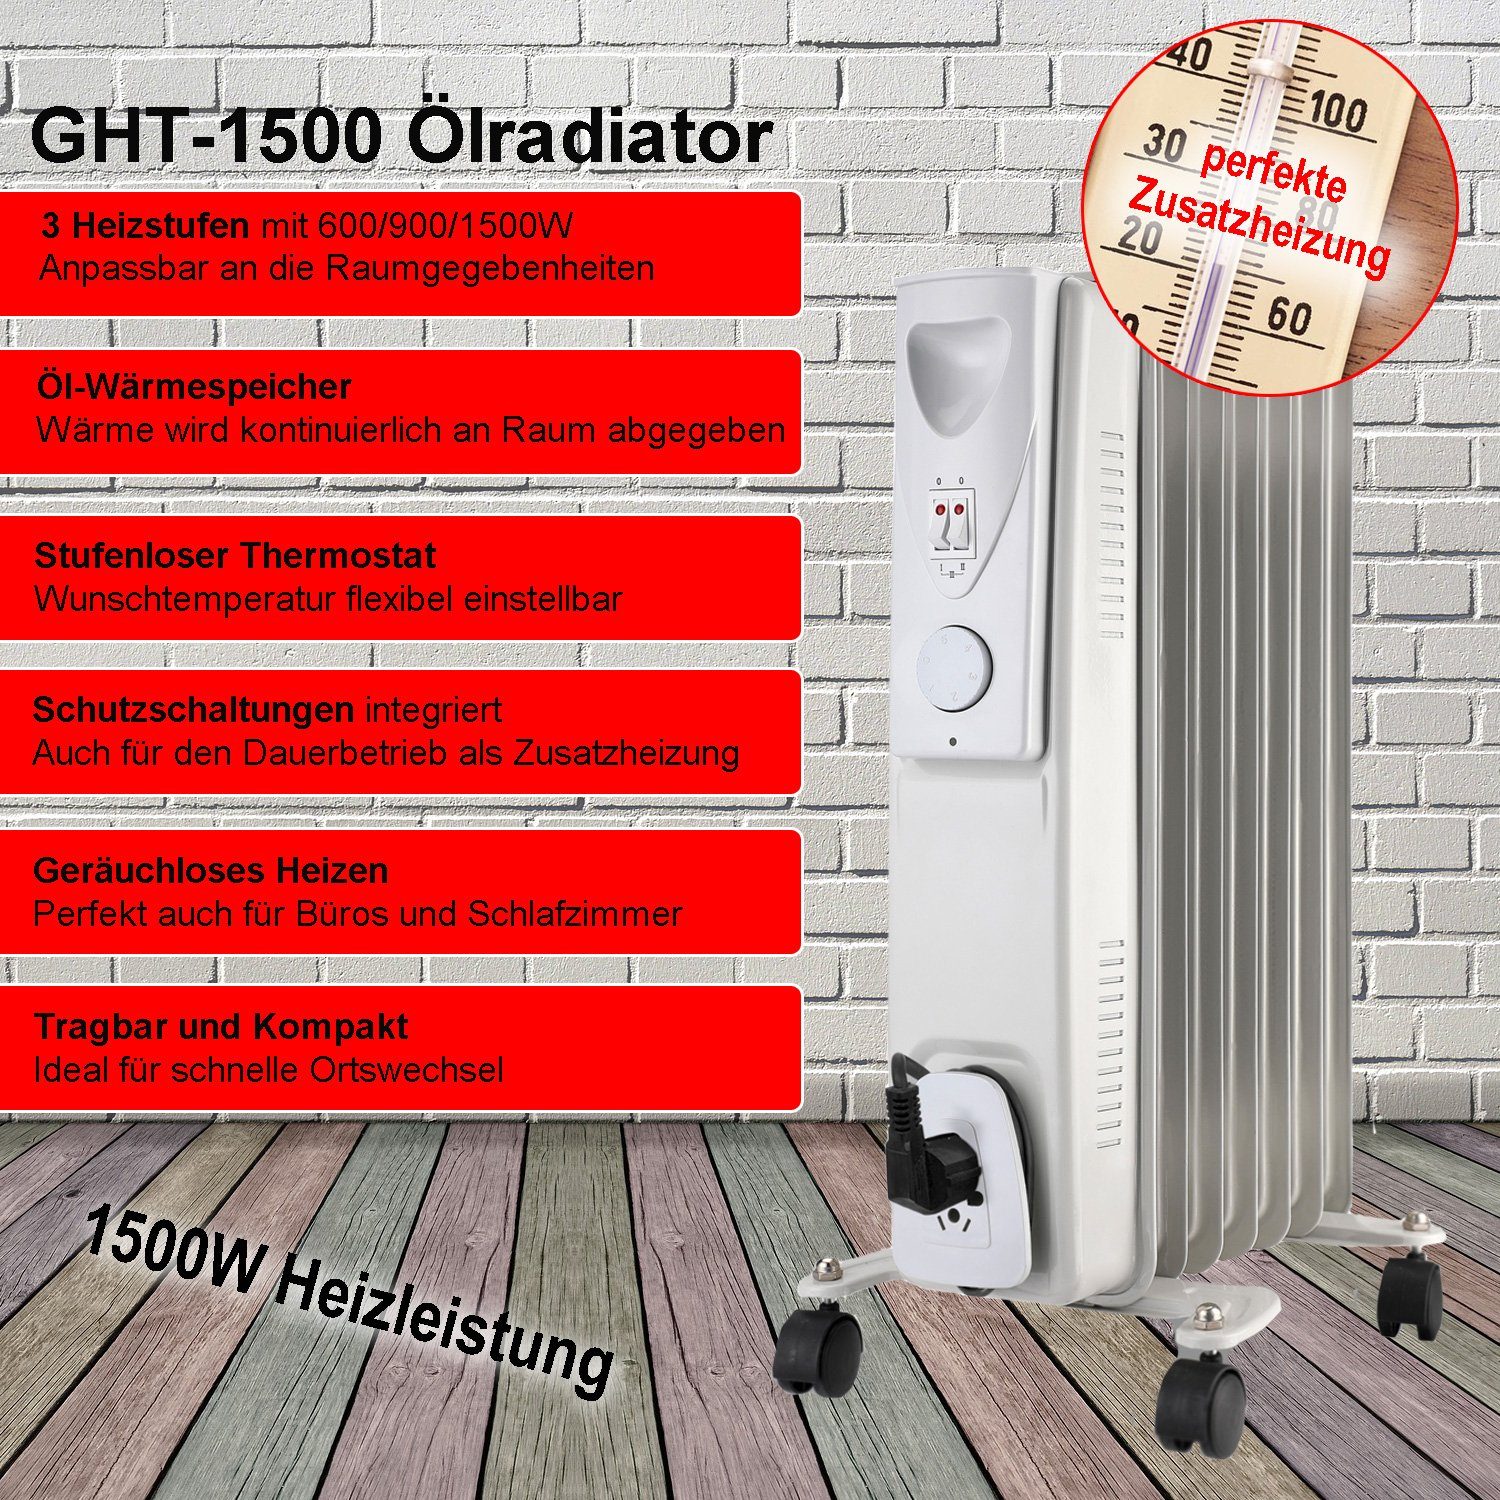 Ölradiator 1500w - Heizung - GORANDO Ölradiator elektrische Speicherofen Zusatzheizung -